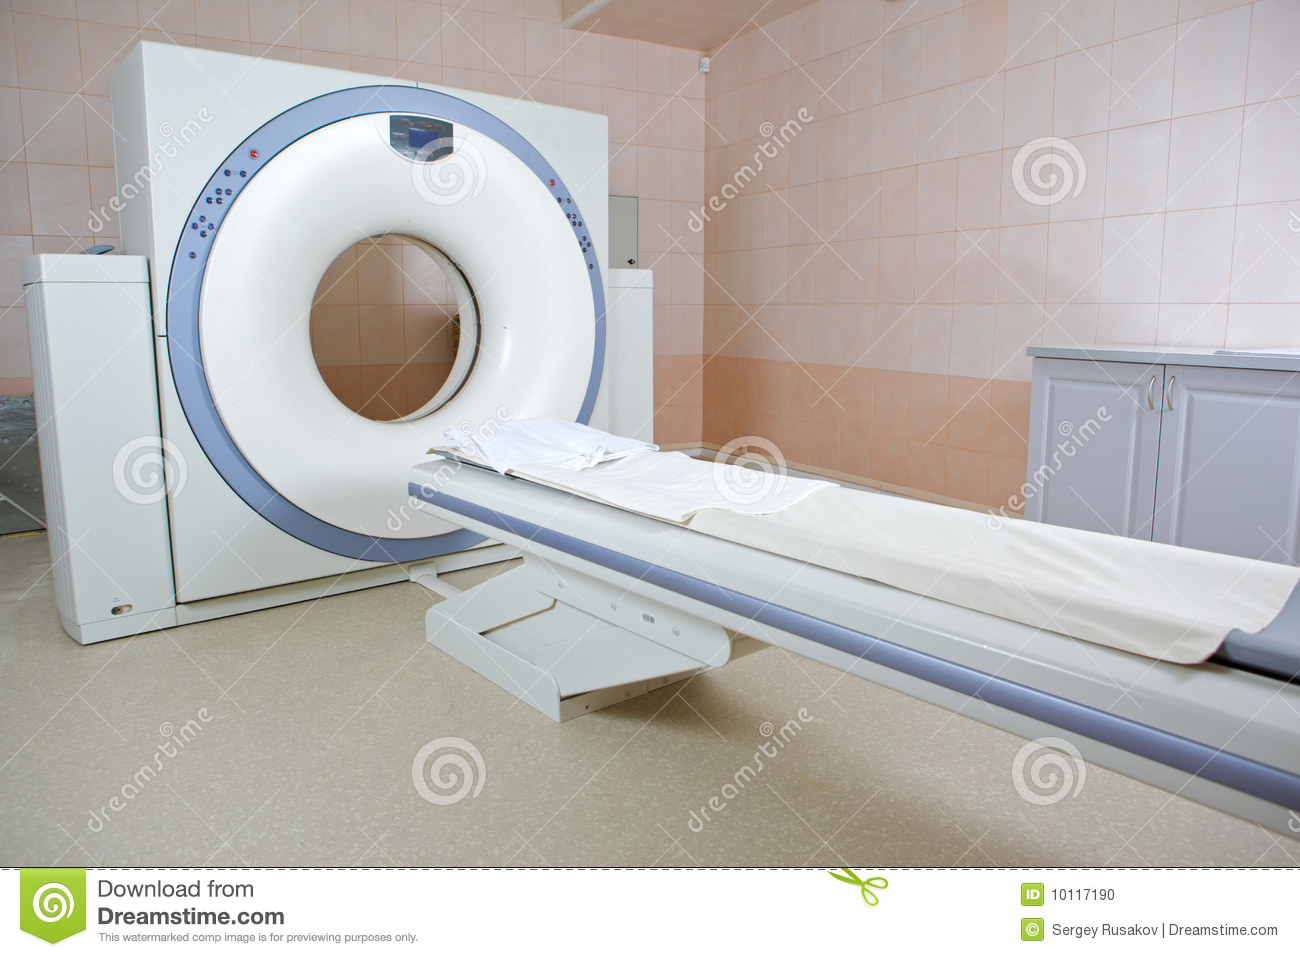 Image Of Magnetic Resonance Imaging Scanner